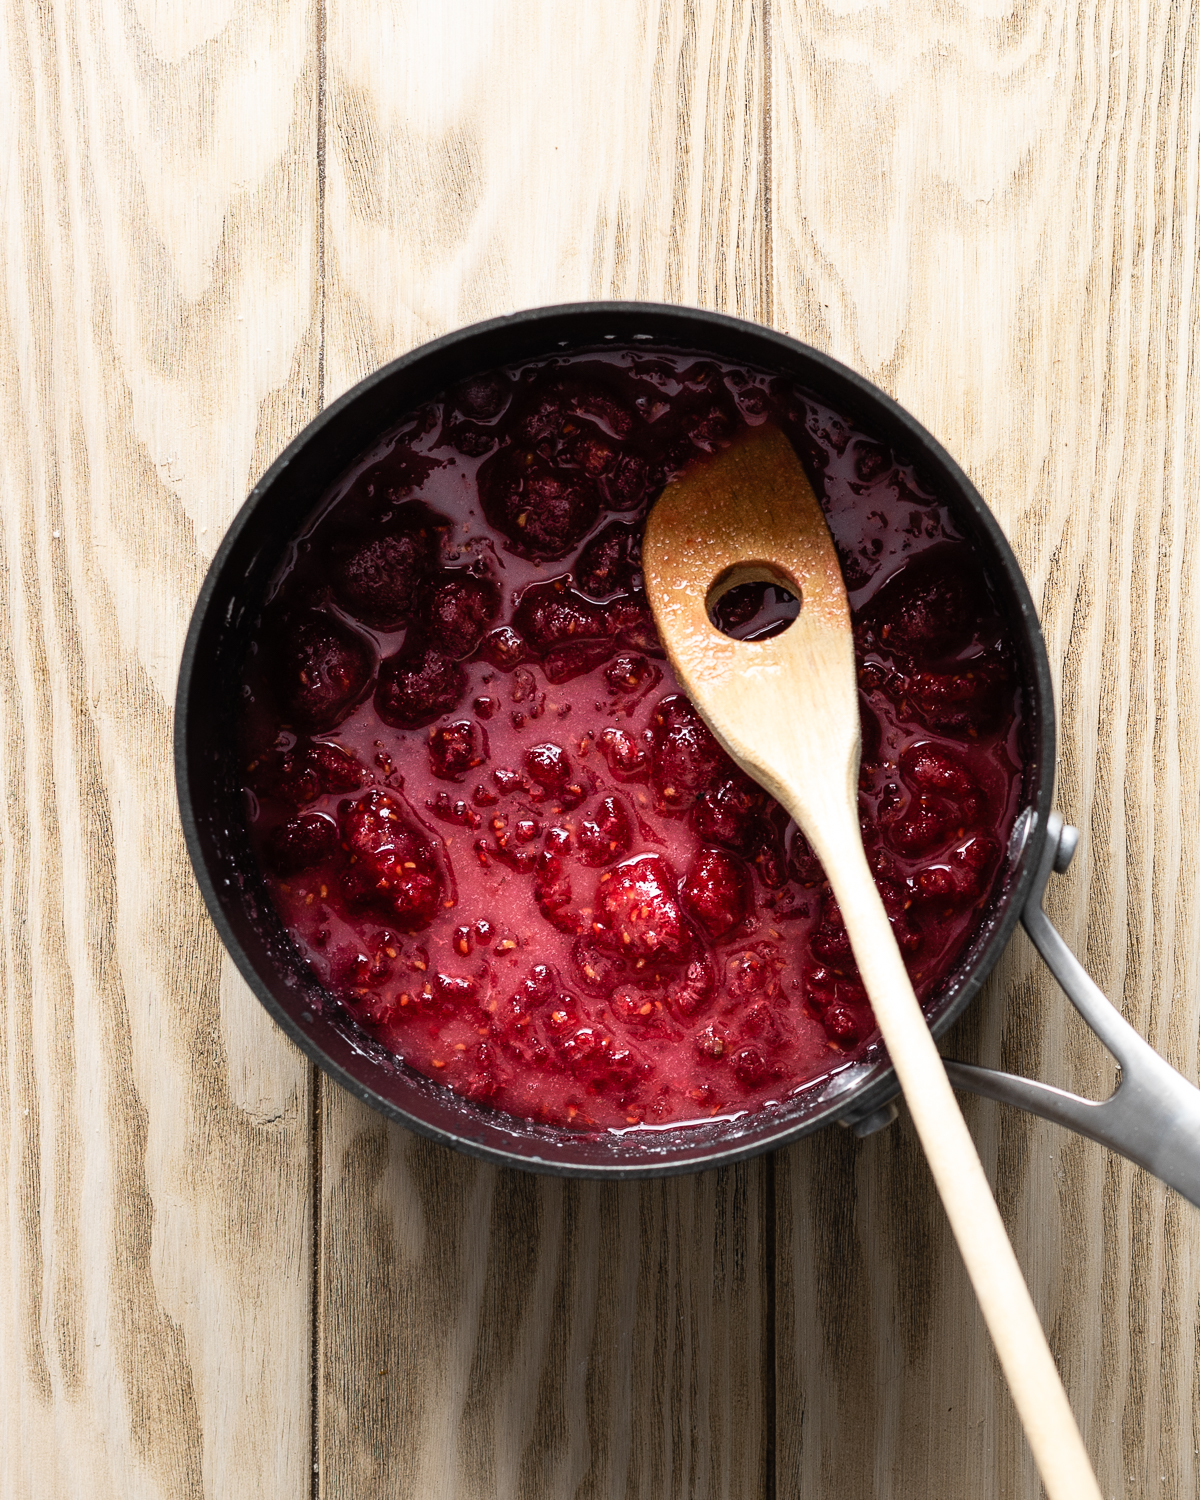 raspberry preserves cooking in a saucepan.